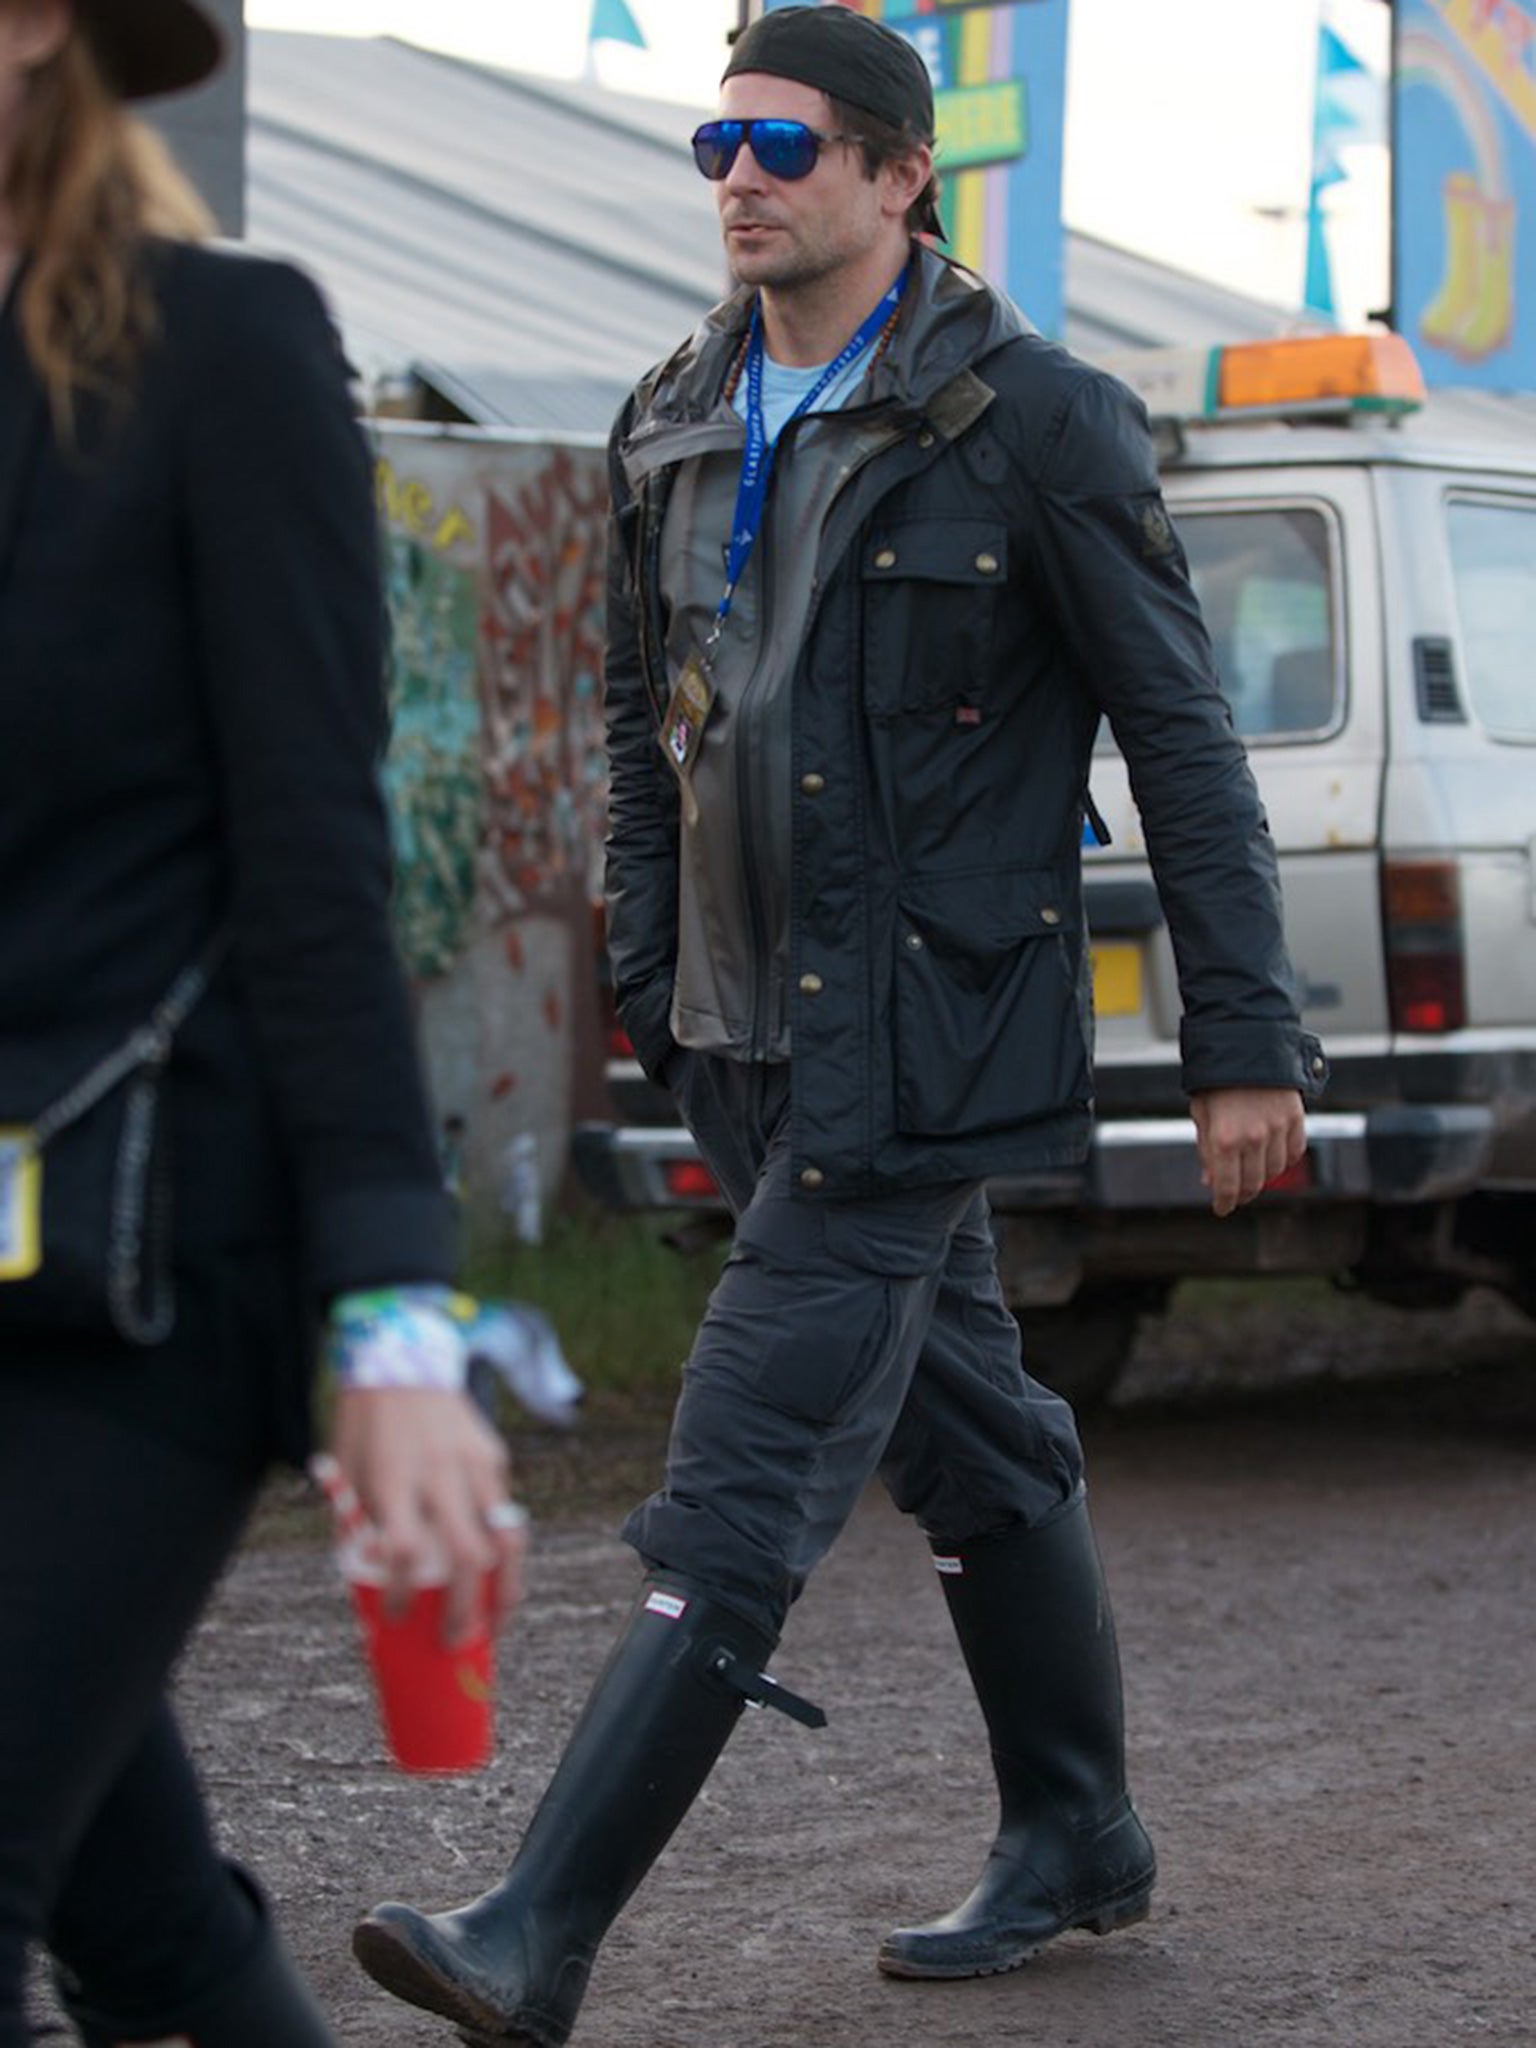 Bradley Cooper at Glastonbury.